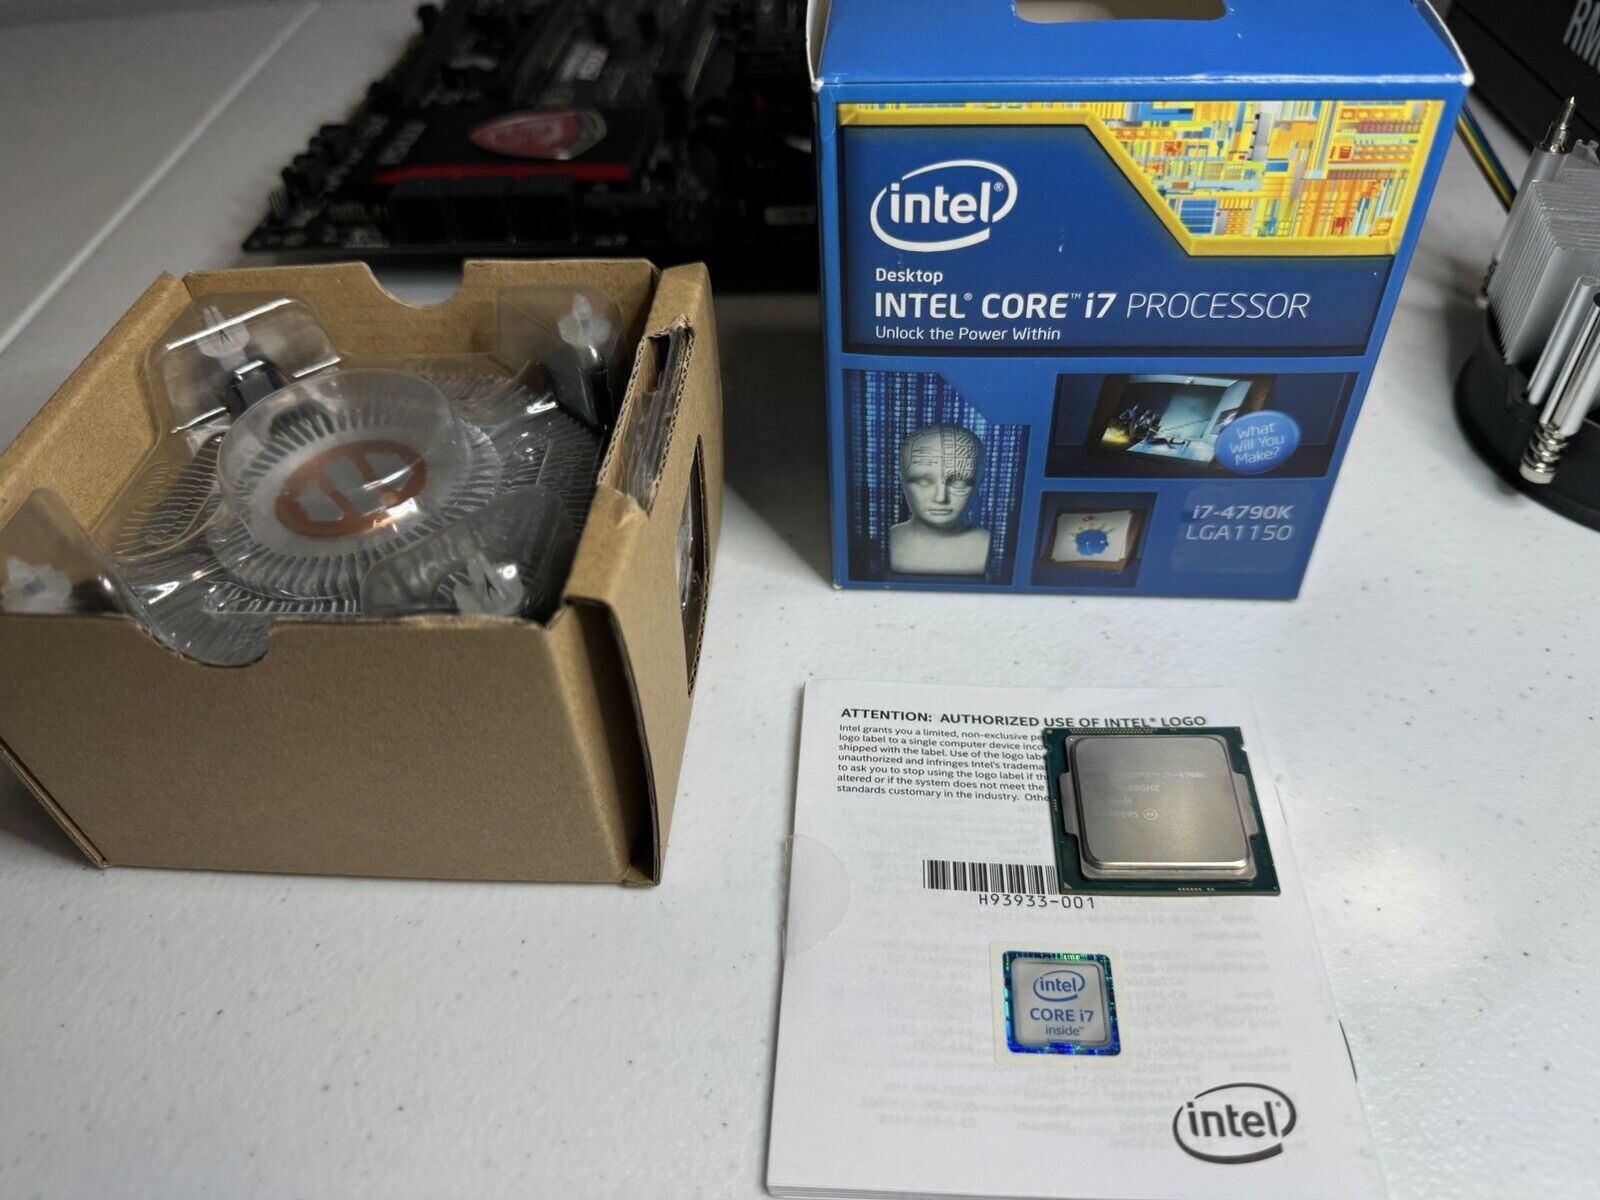 Intel Core™ i7-4790K up to 4.40 GHz Quad Core Processor